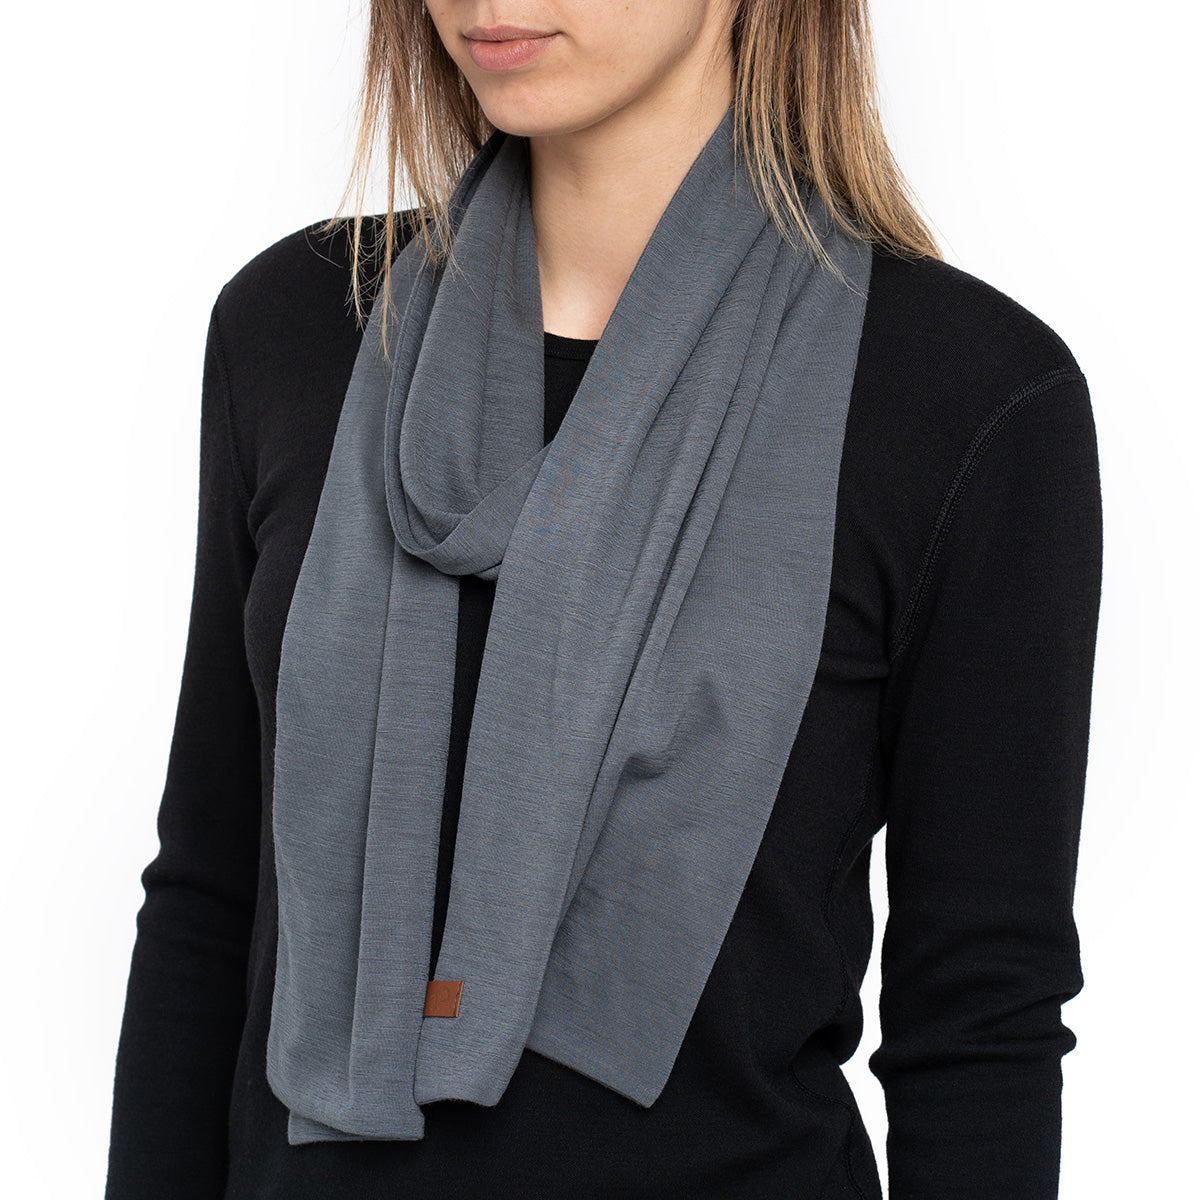 MENIQUE 100% Merino Wool Womens Scarf Perfect Grey